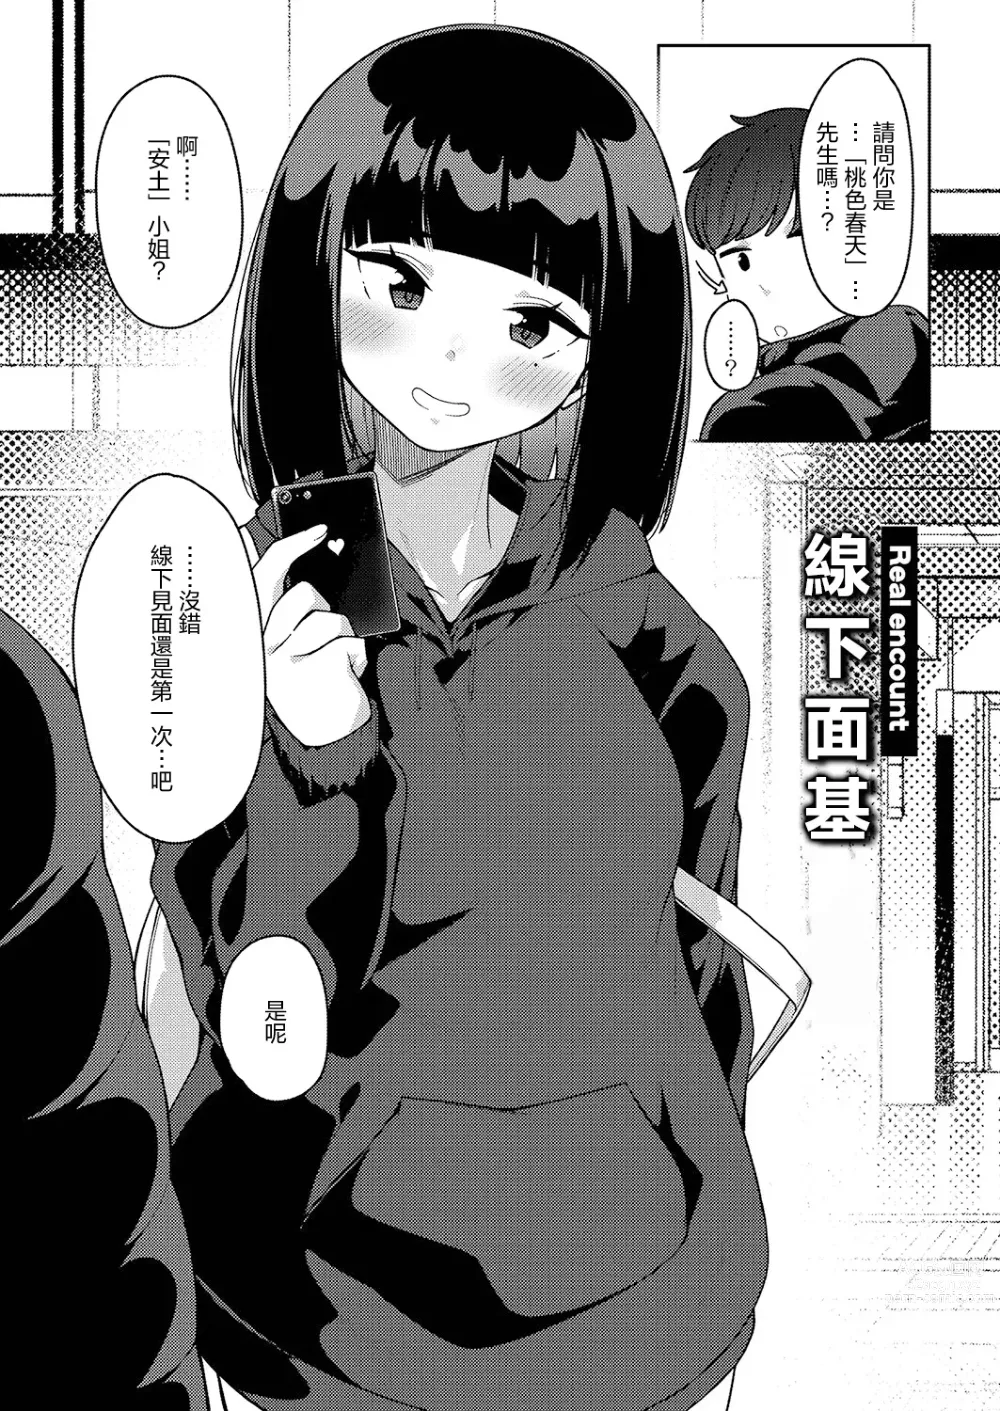 Page 2 of manga 線下面基